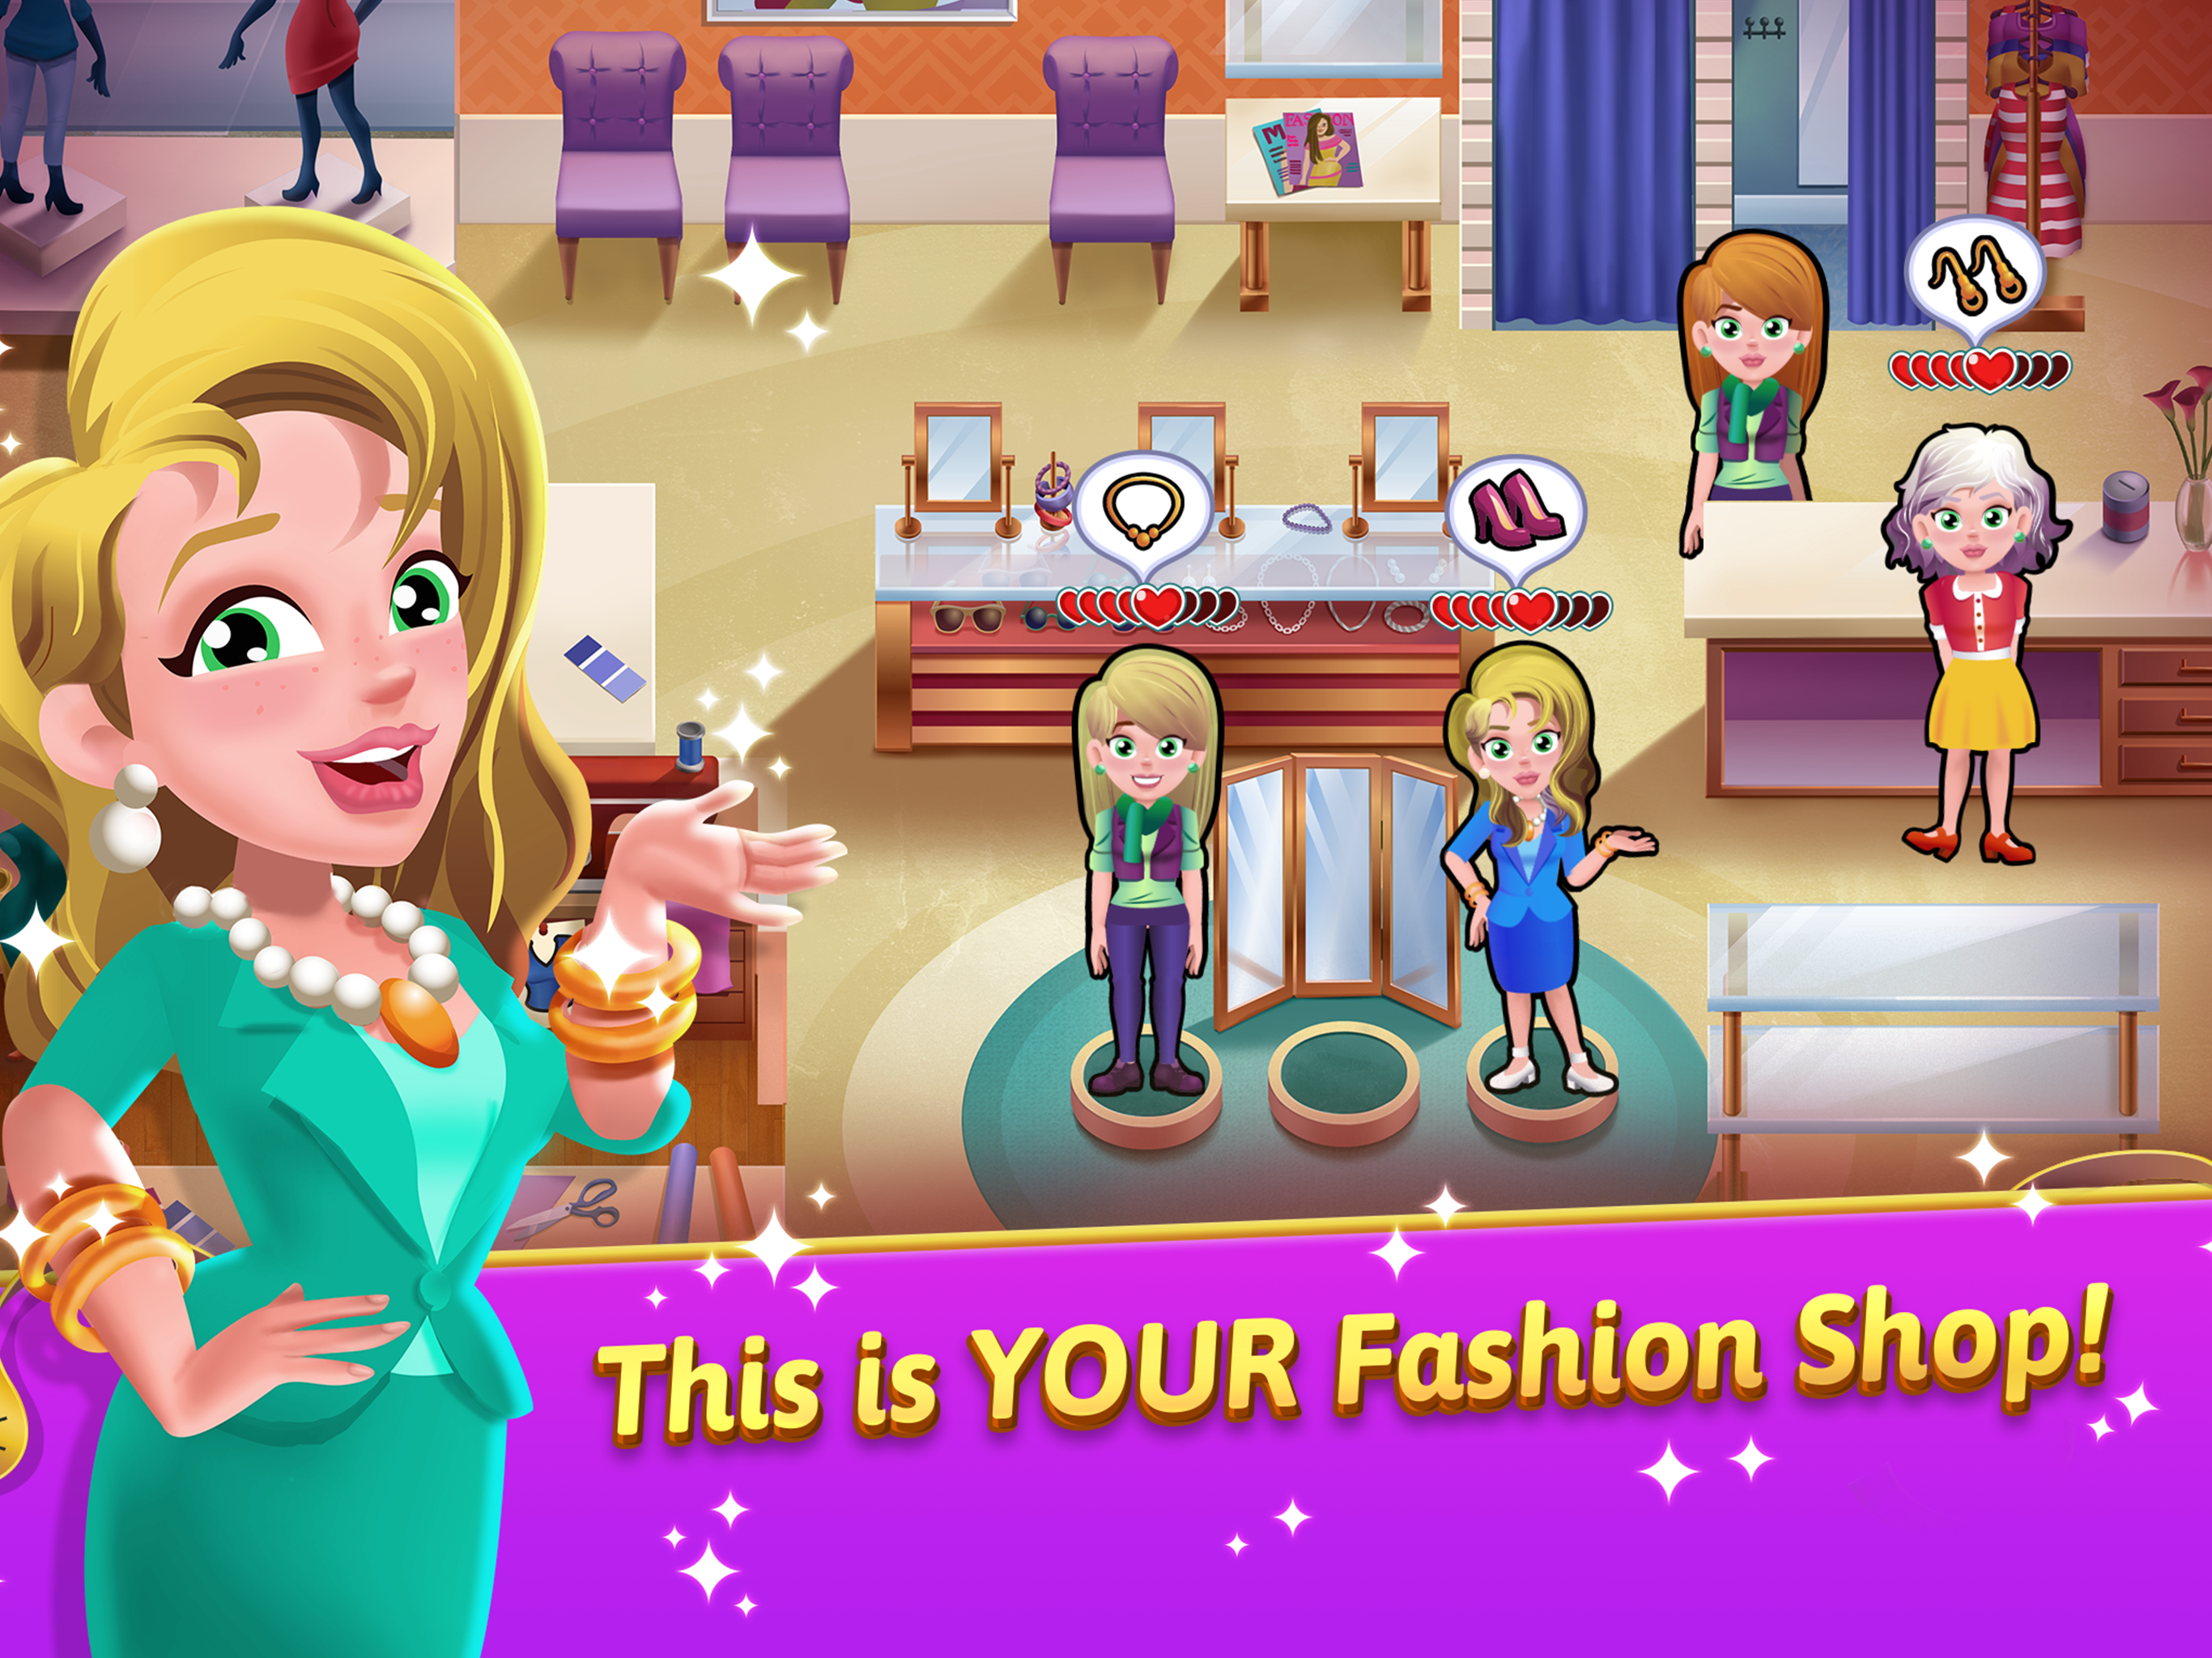 Fashion Salon Dash: Shop Gameのキャプチャ